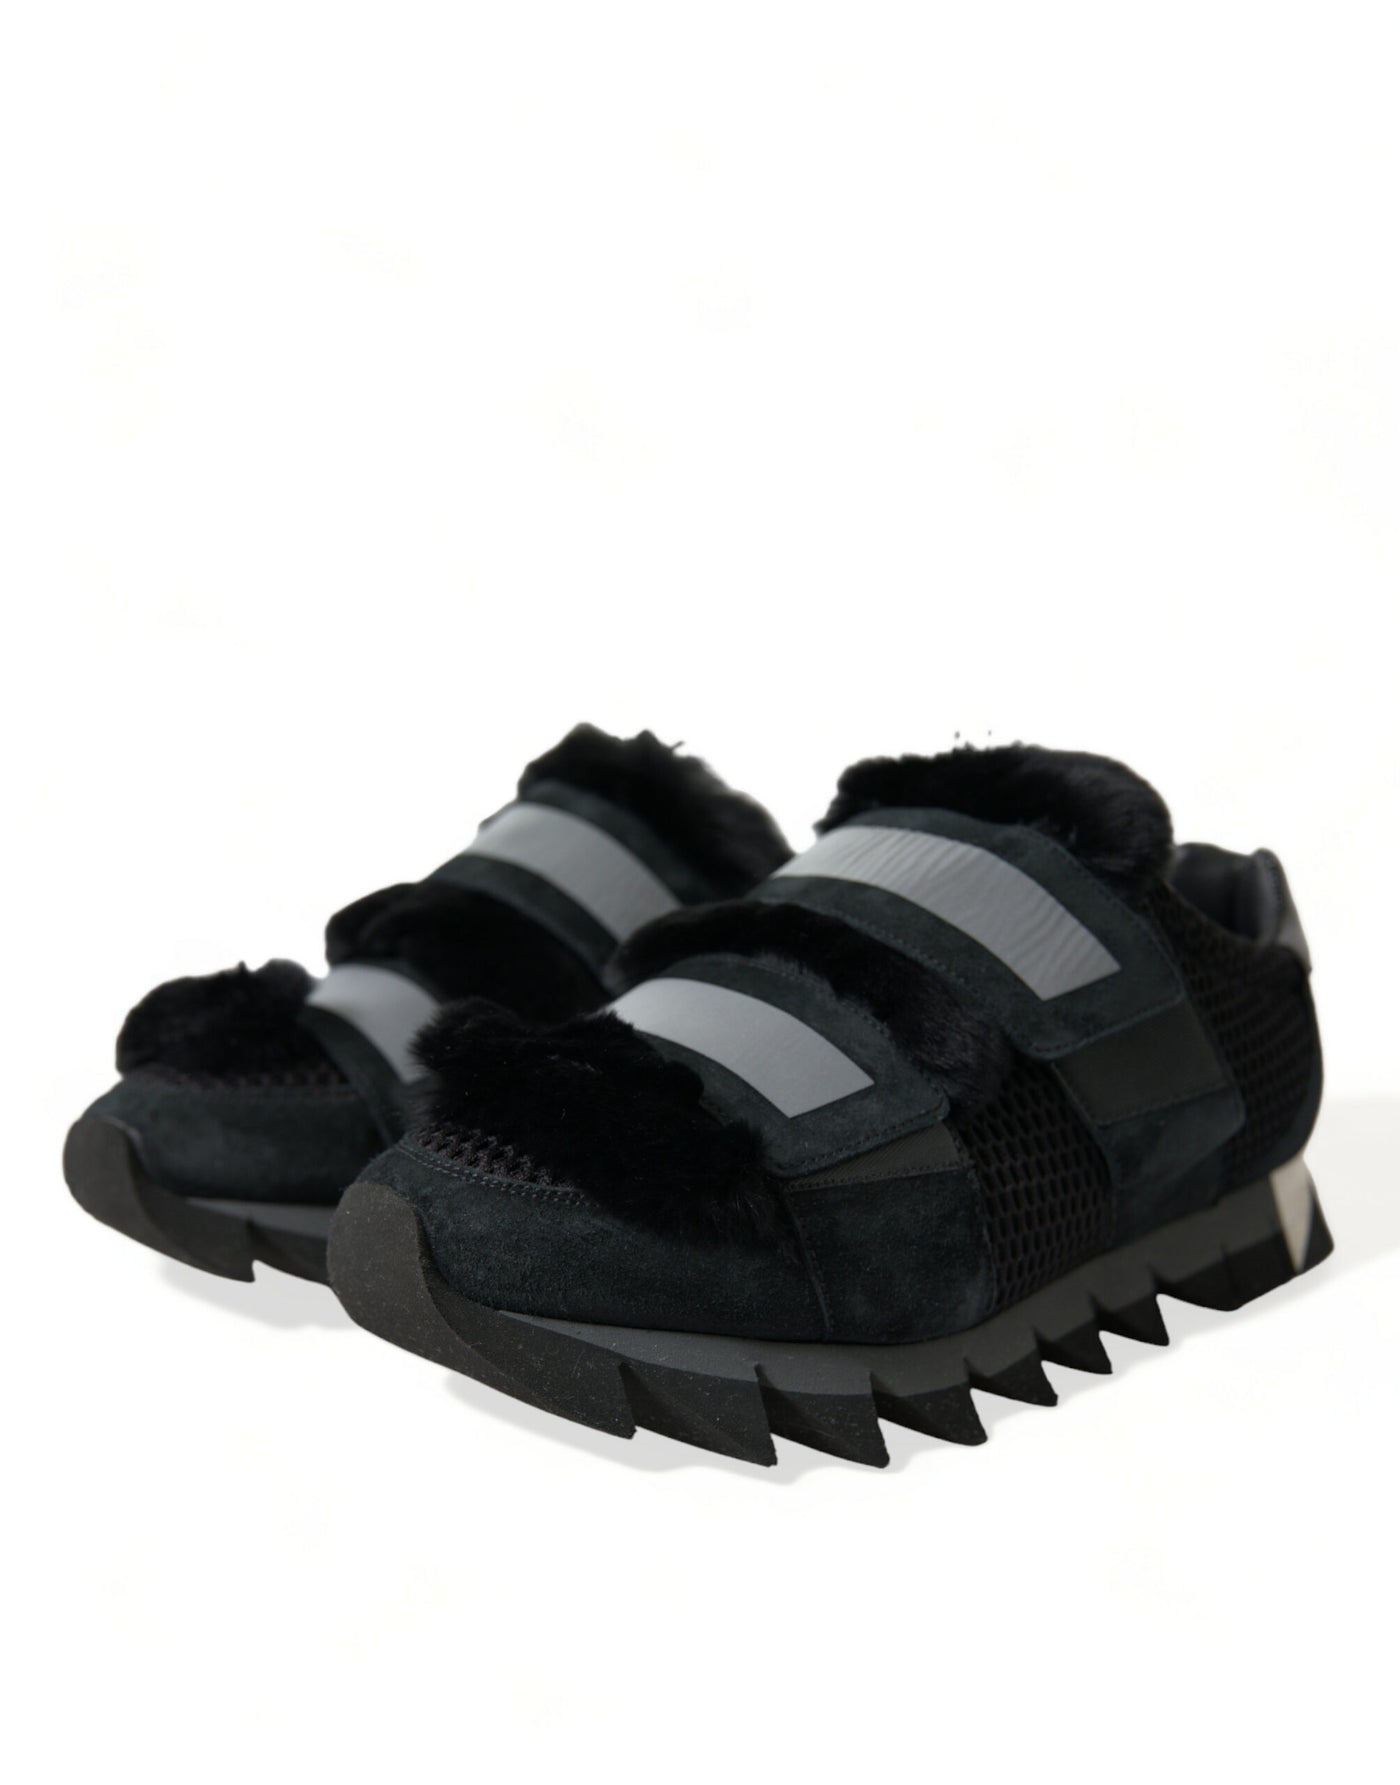 Dolce & Gabbana Black Fur Embellished Suede Sneakers Shoes